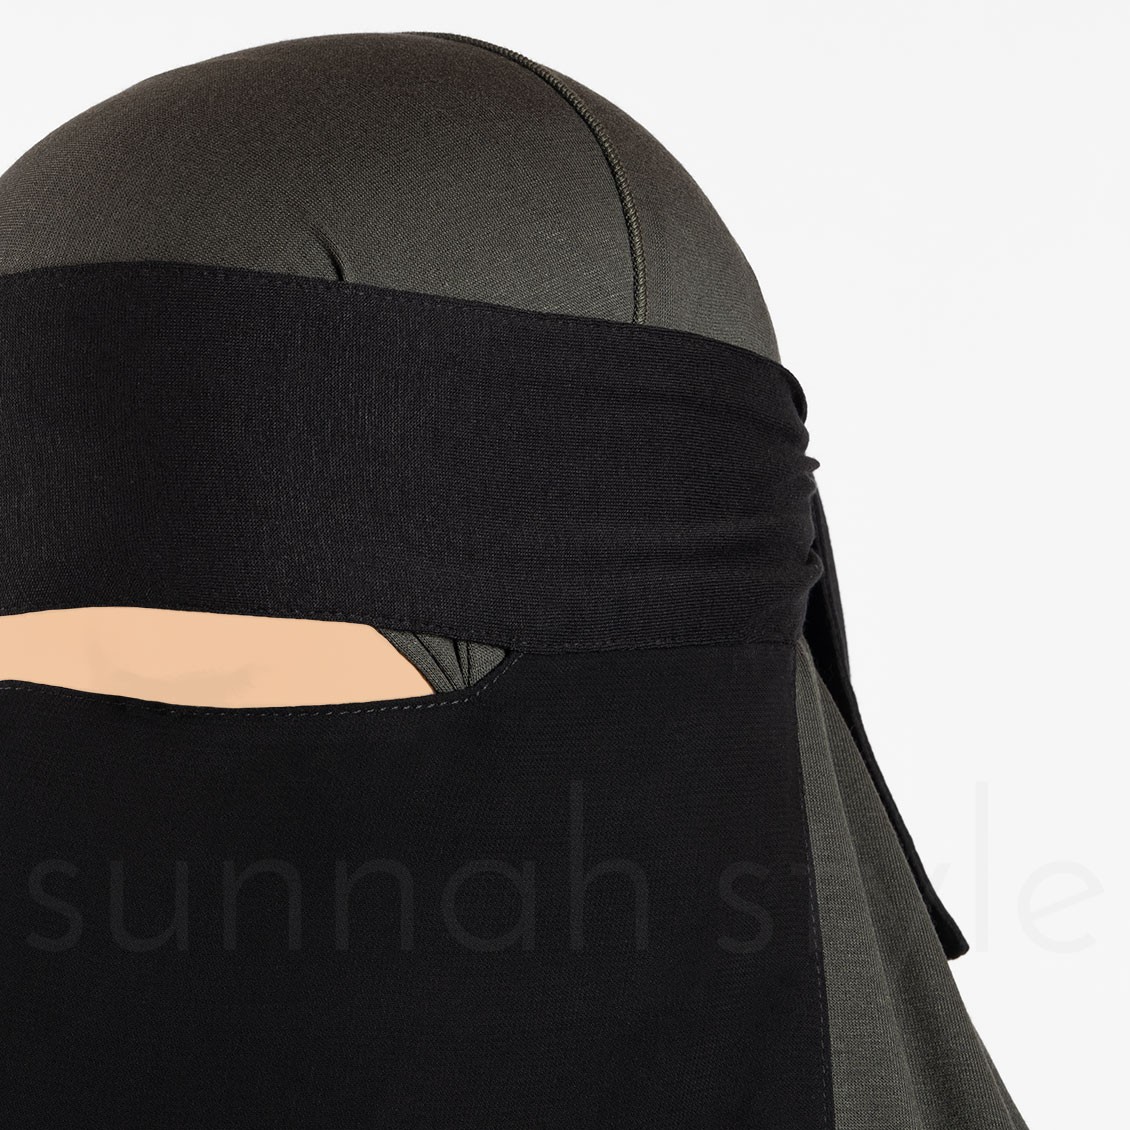 Sunnah Style Narrow No-Pinch One Layer Soft Fit Niqab Black